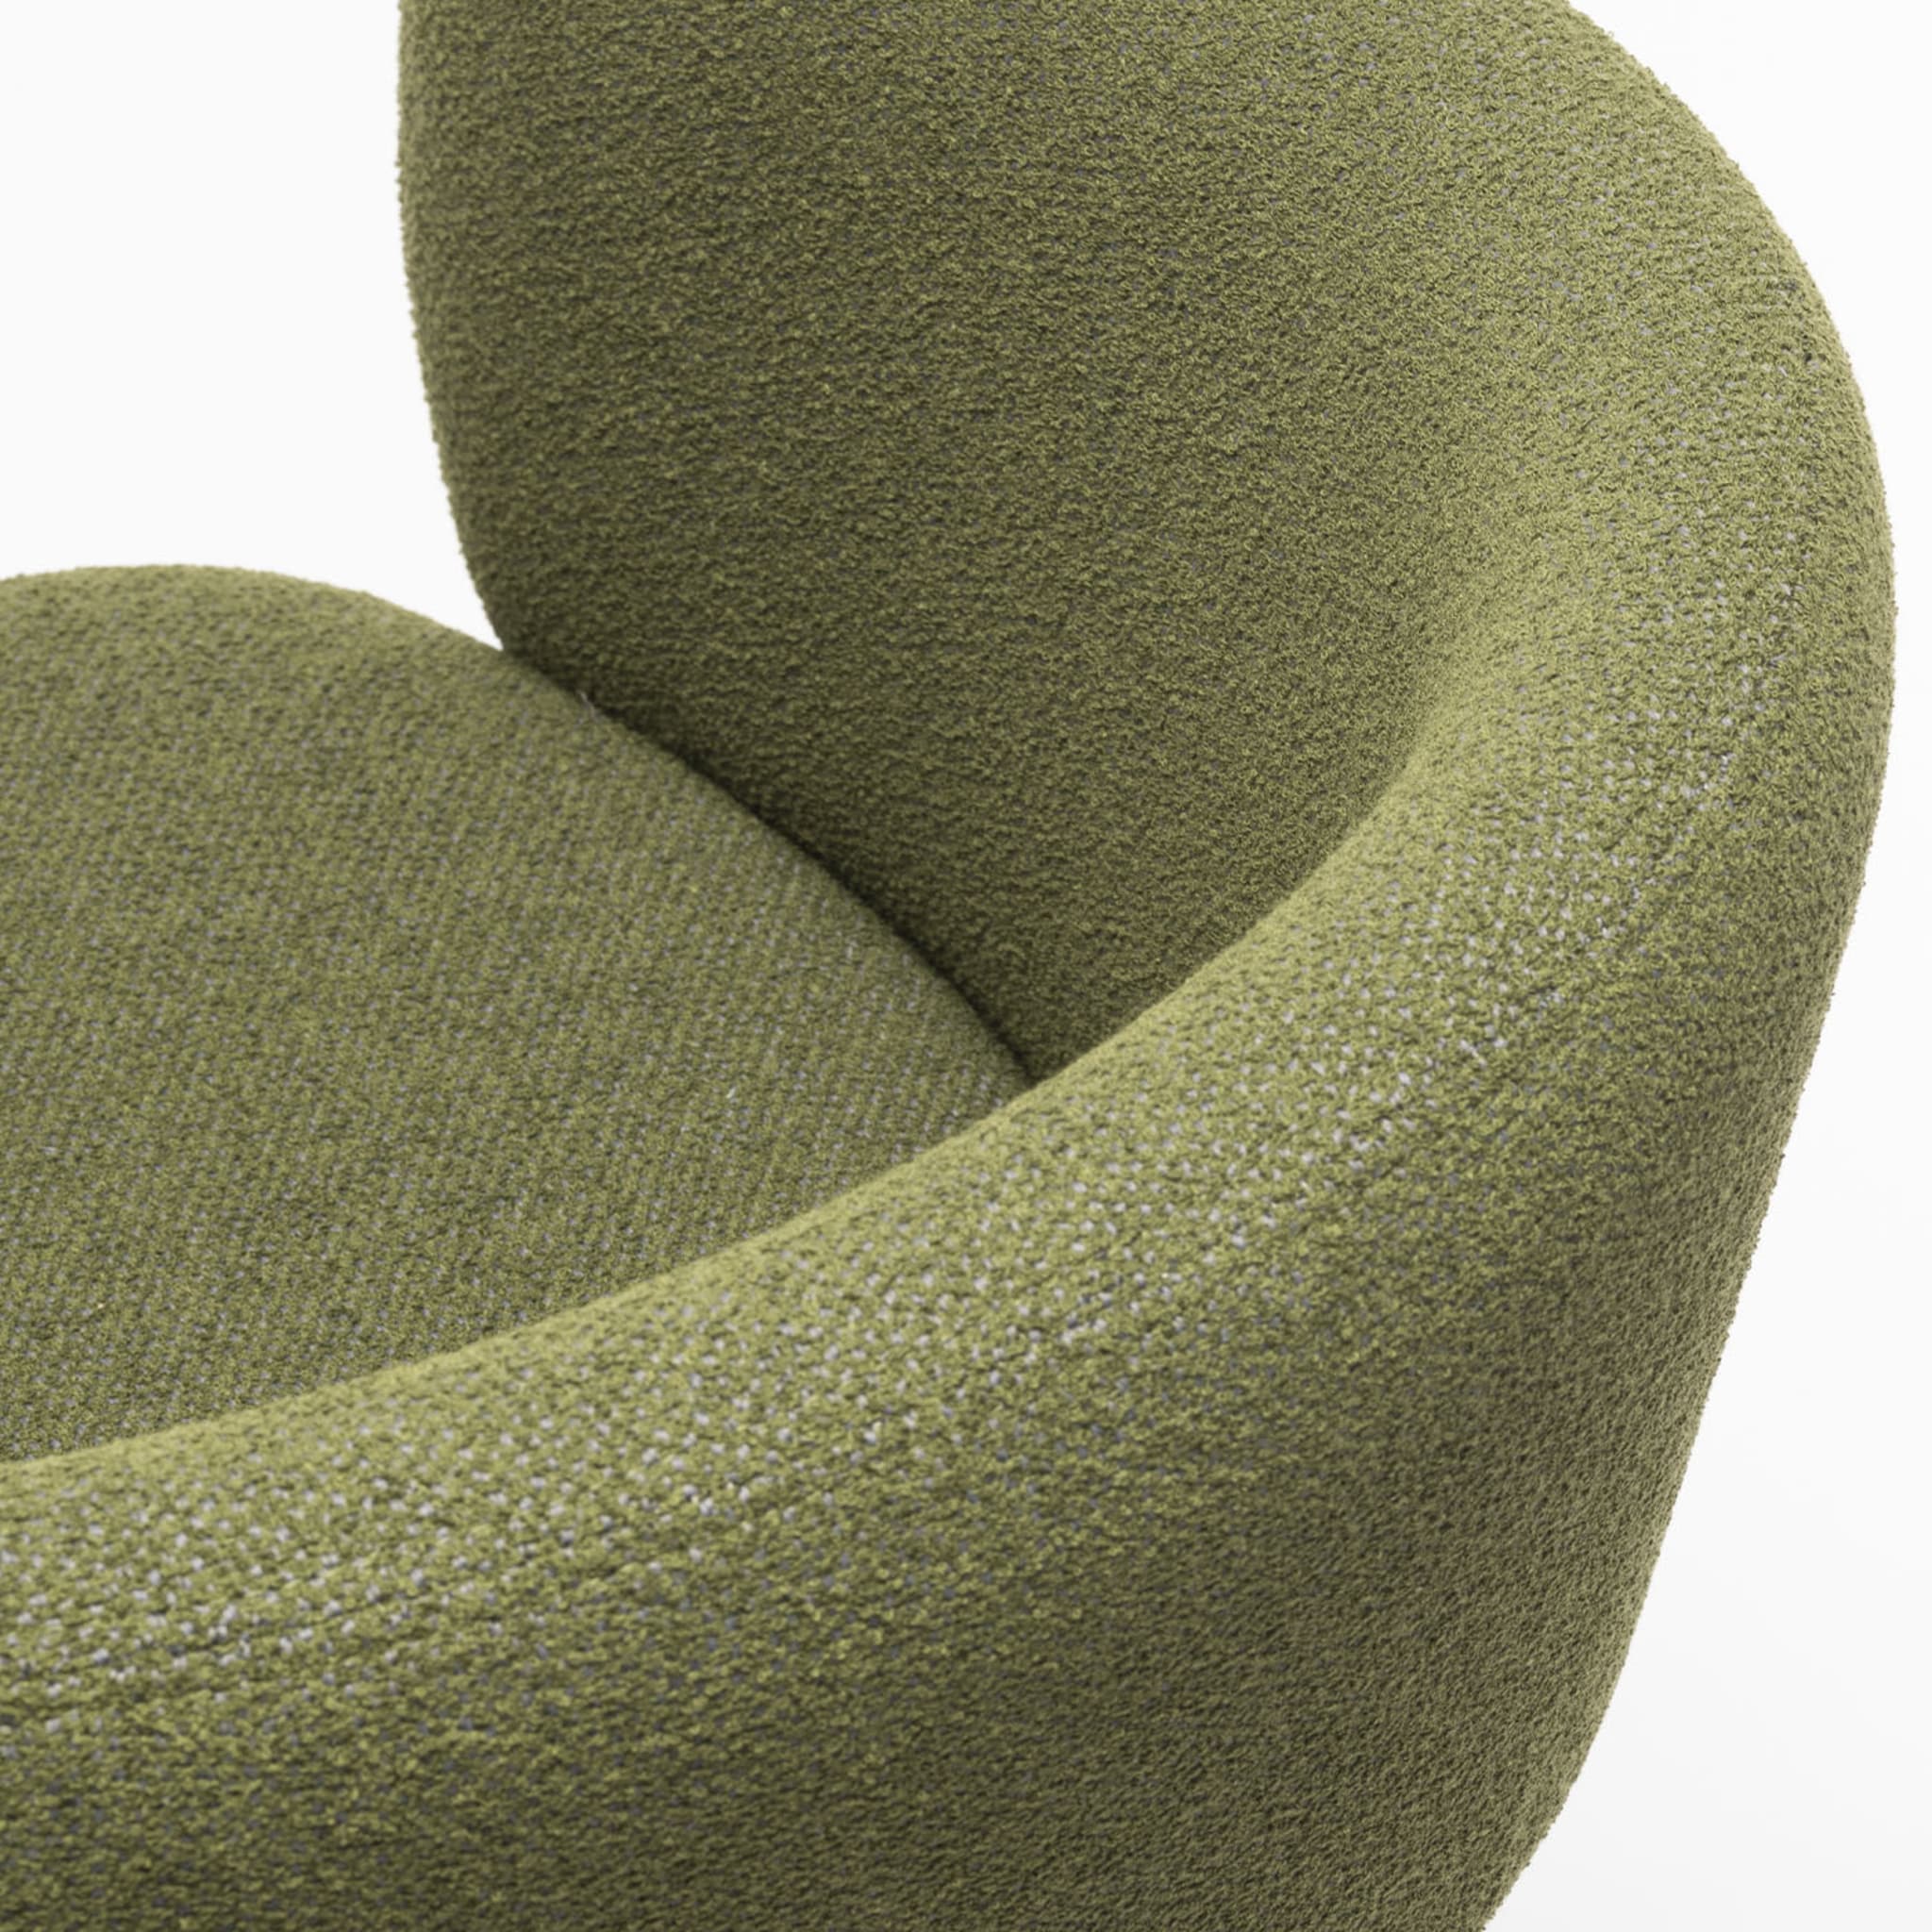 Bel S Green Chair By Pablo Regano - Alternative view 1